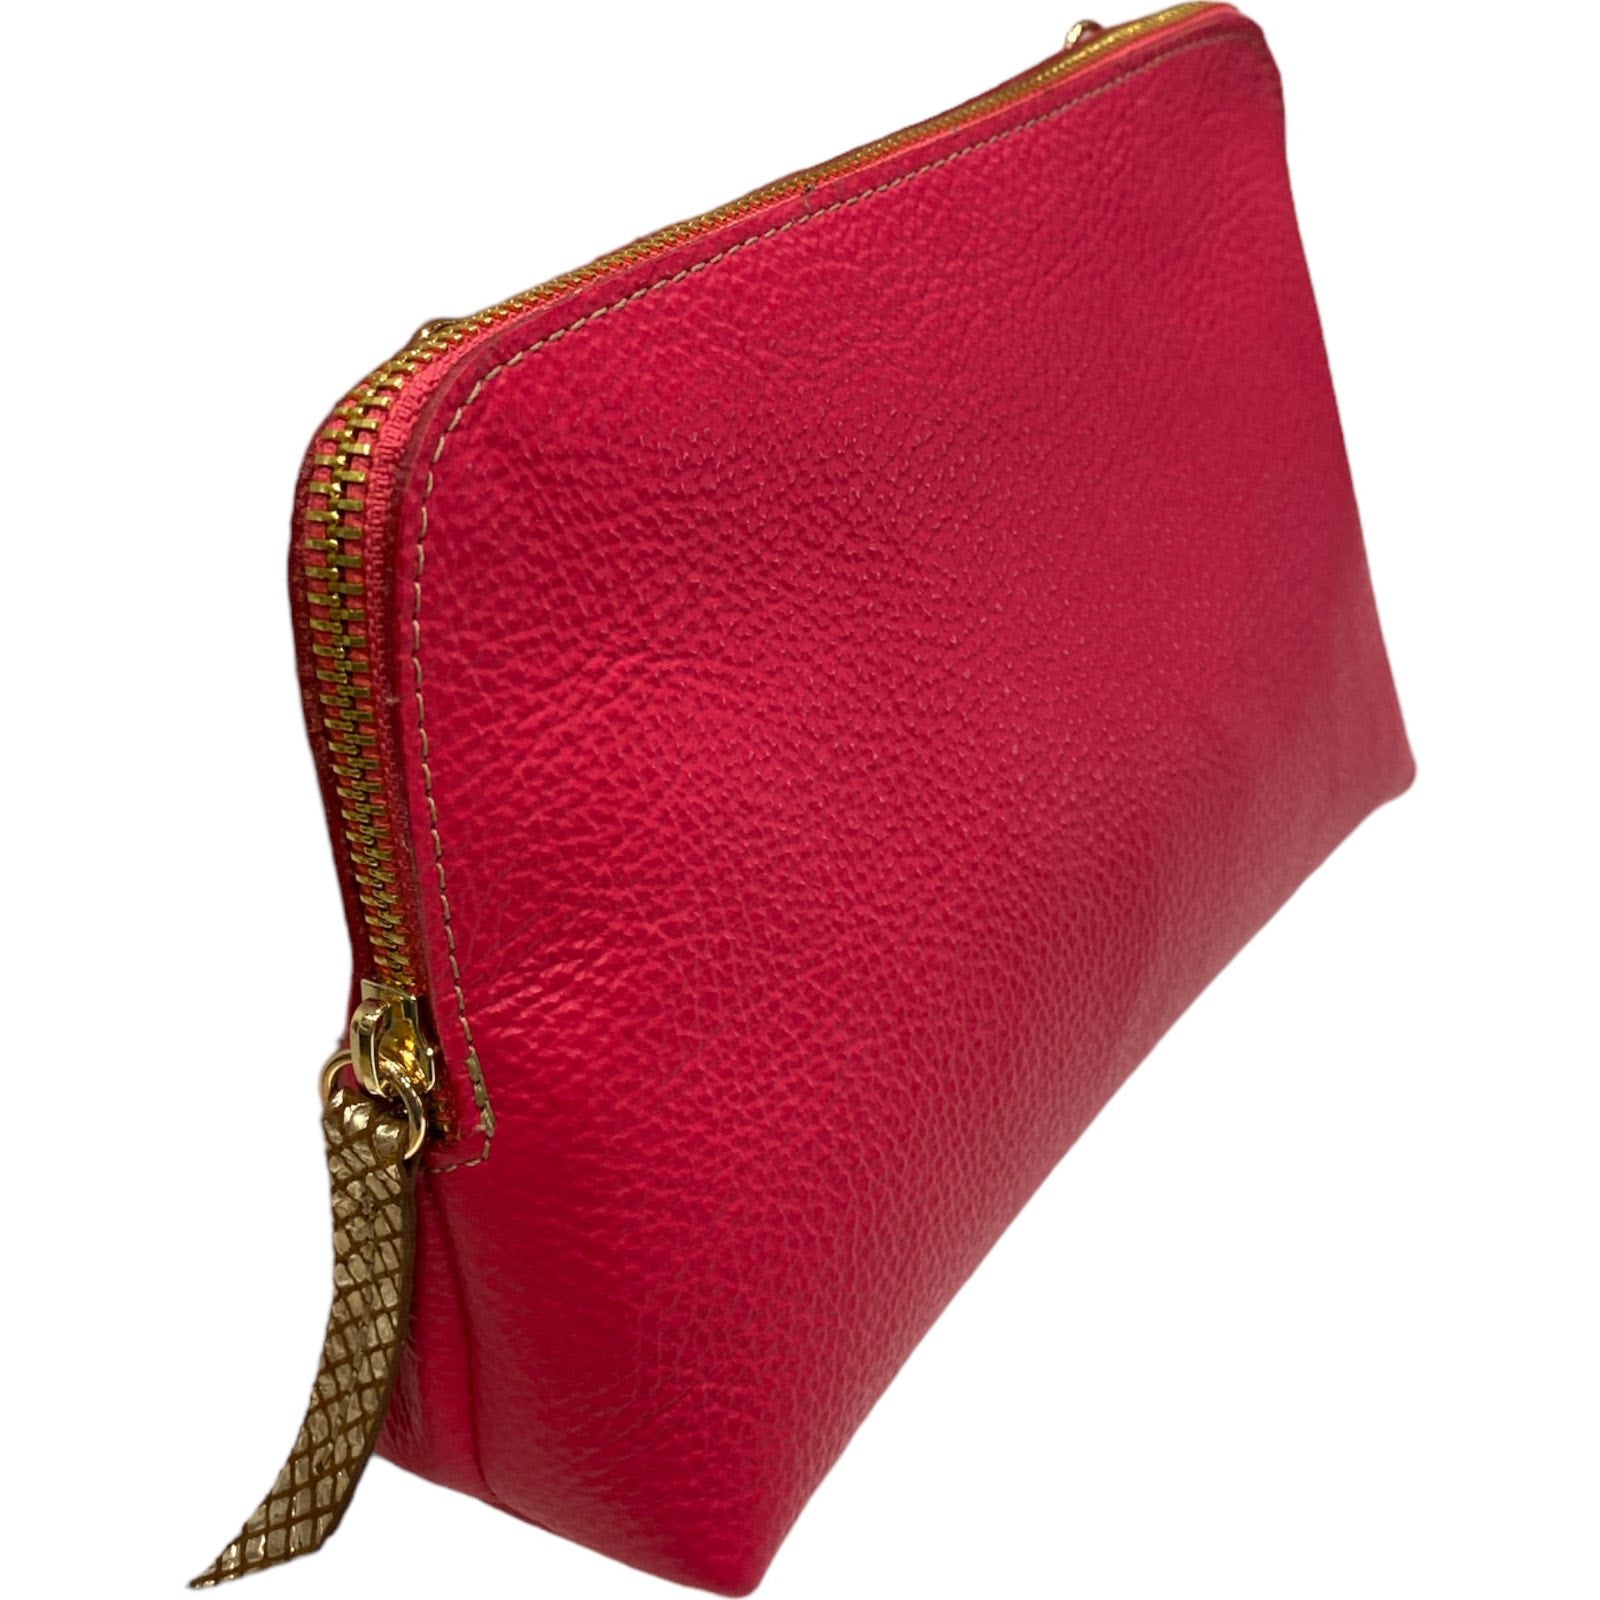 Box XL. Raspberry pink leather messenger bag